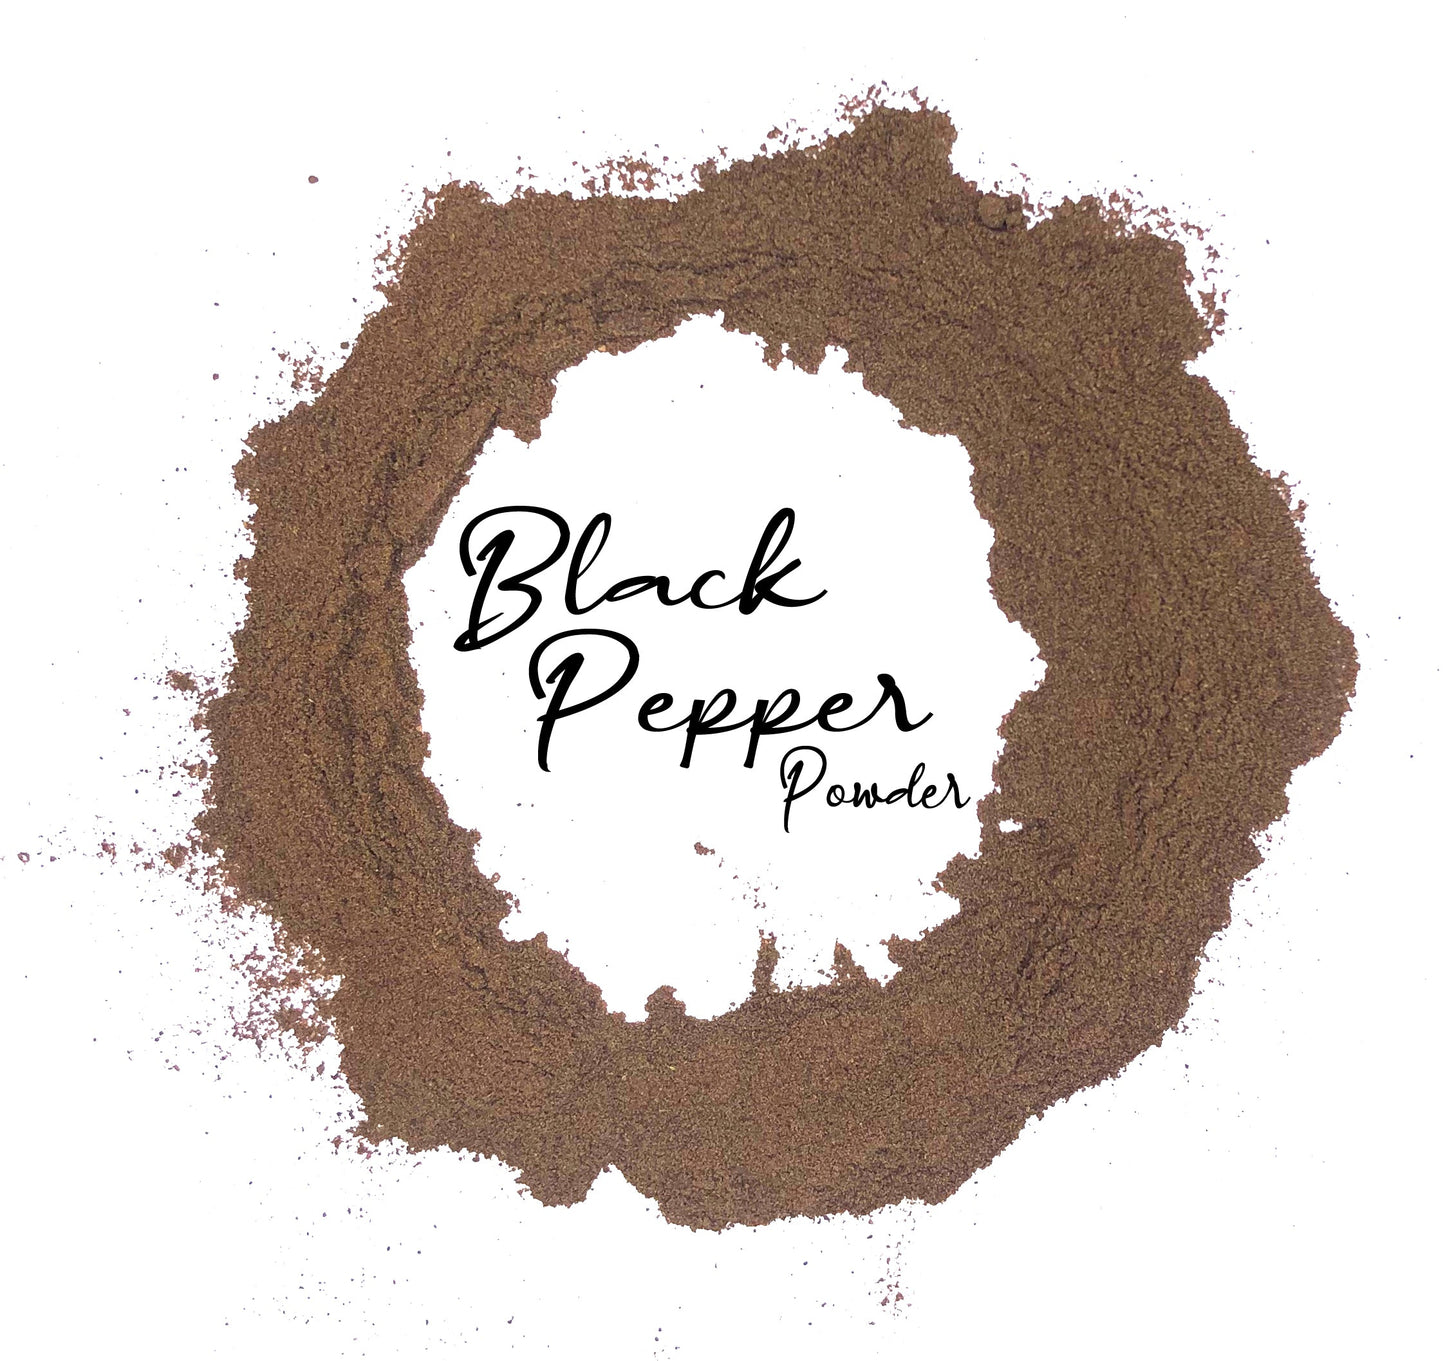 Wholesale Spices & Herbs - Black Pepper Powder, Organic 3.7oz (104.8g) Jar